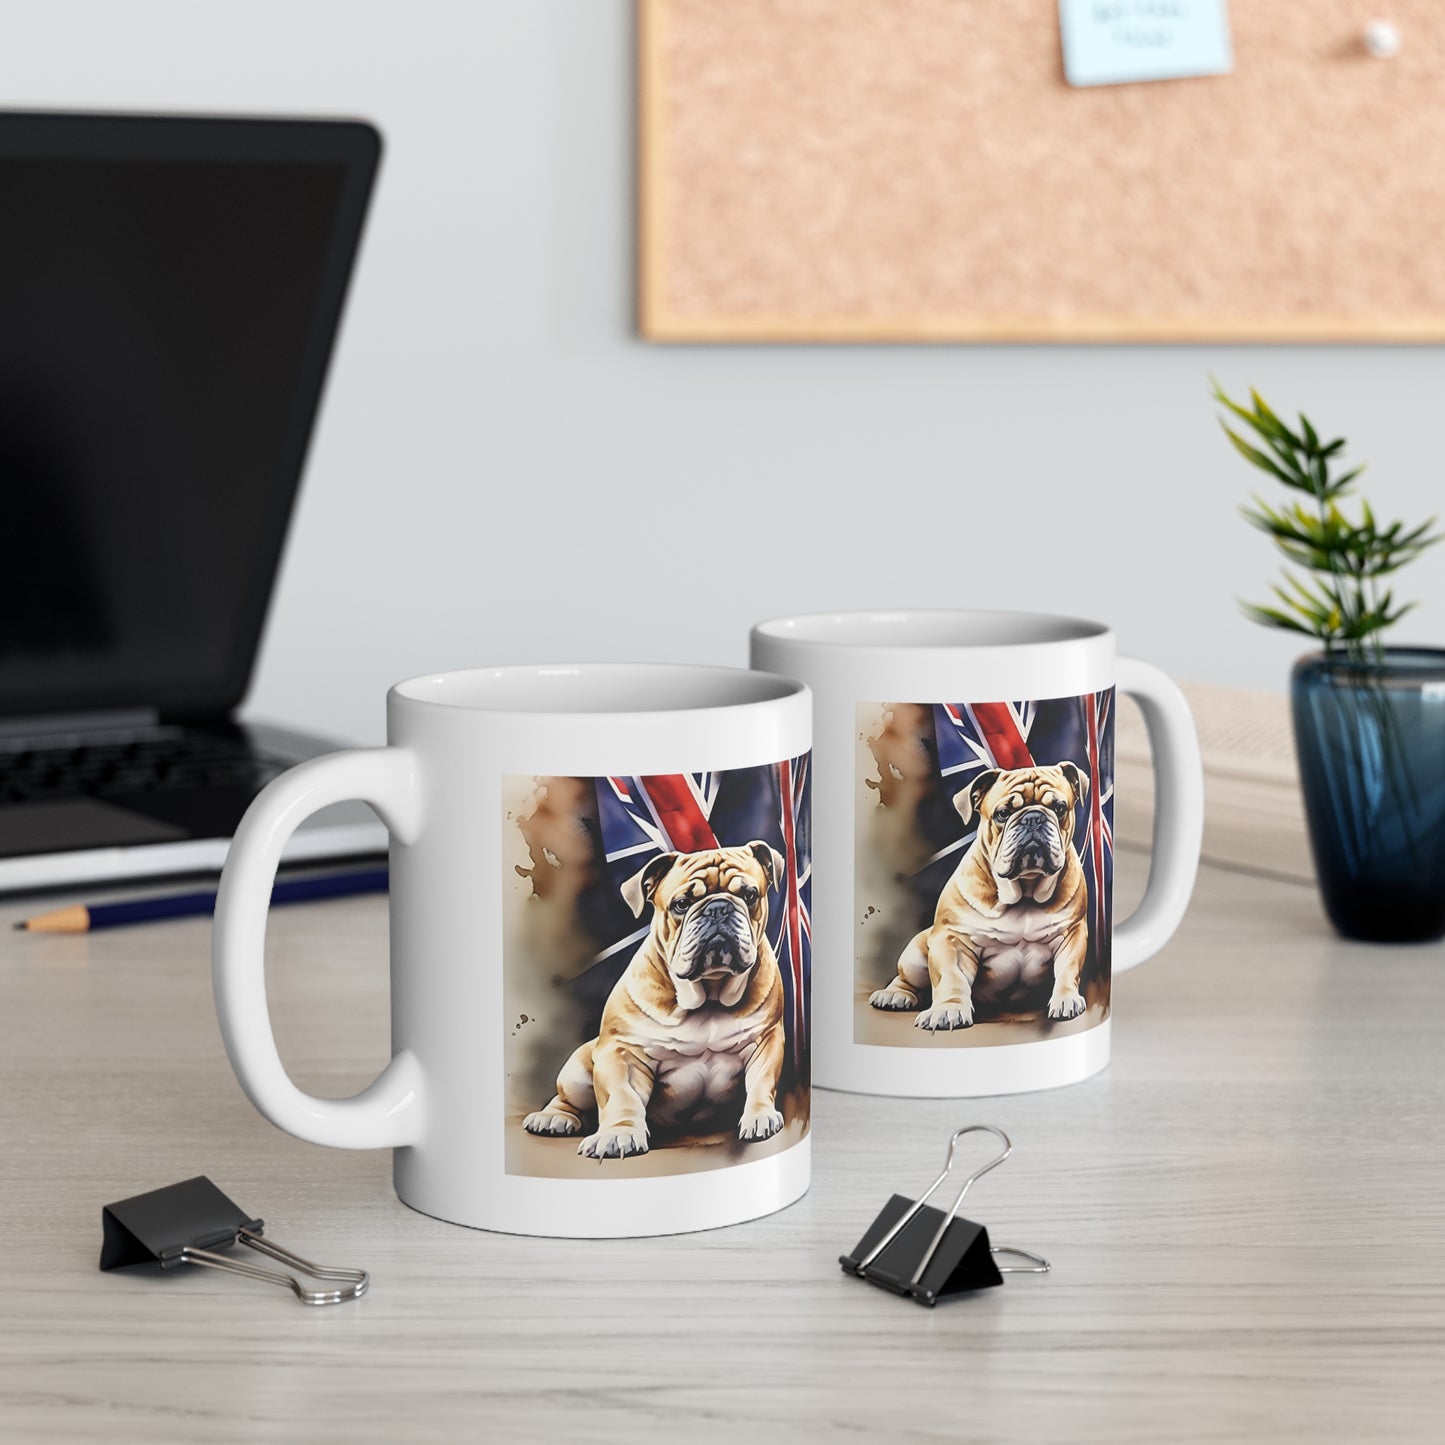 British Bulldog and Union Jack Flag Coffee Mug